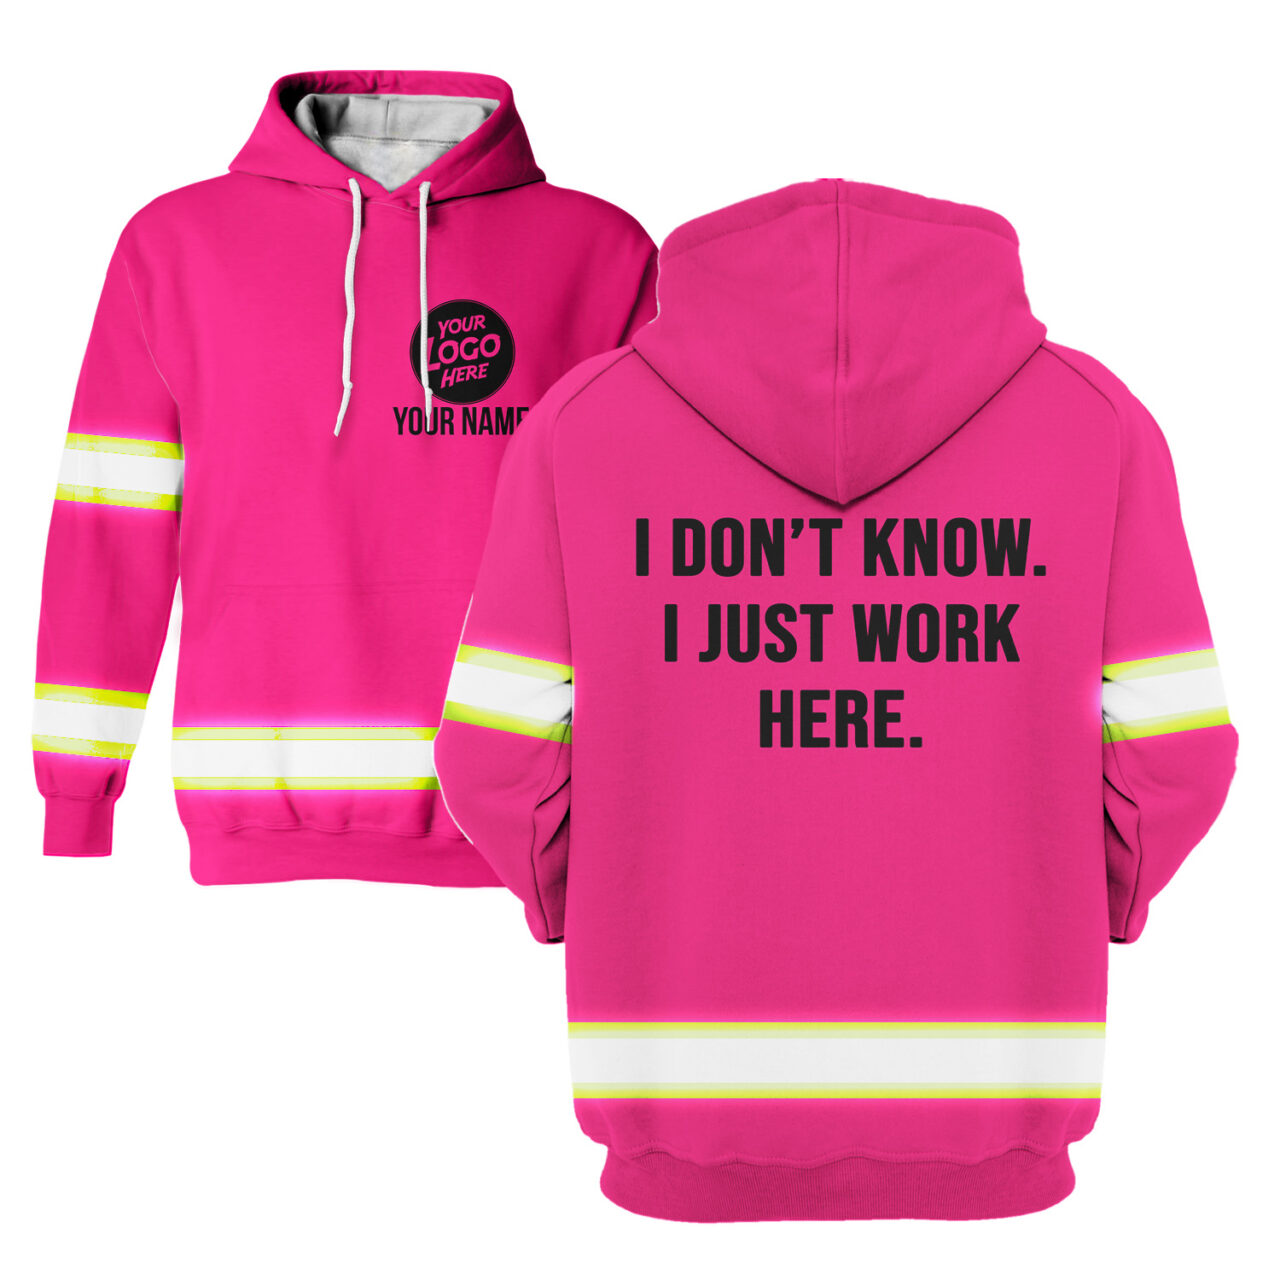 shoppershift Hi Vis Hoodie/Shirt - Custom Logo/Name High Visibility Outdoor  Protective Workwear Team Work Uniform